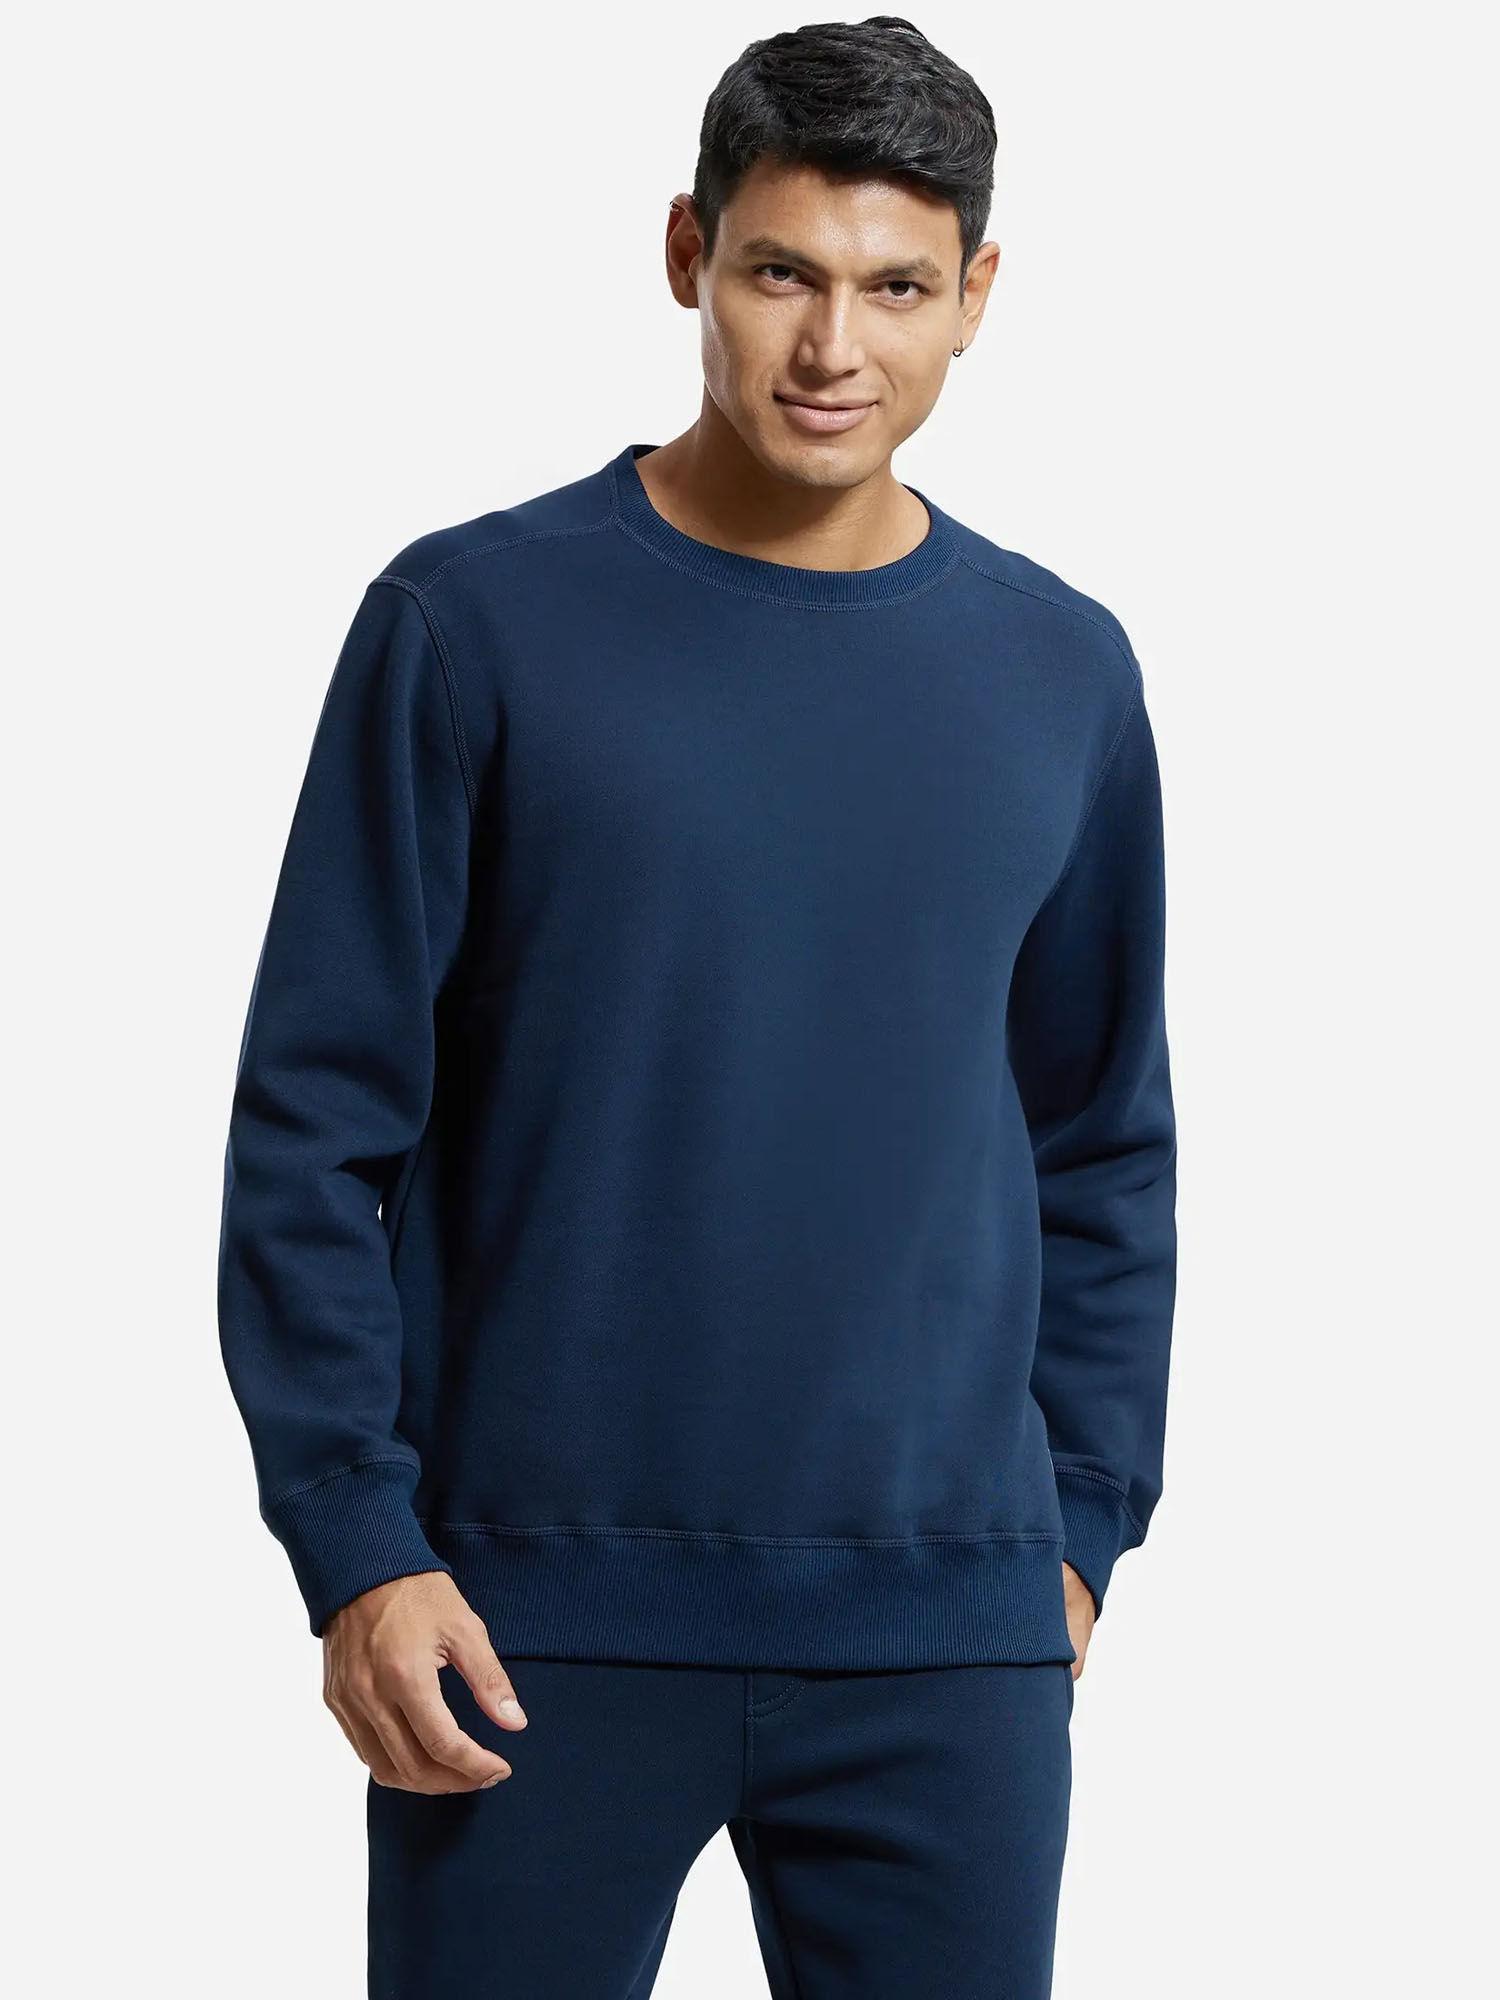 us92-men's-super-combed-cotton-rich-fleece-fabric-navy-blue-sweatshirt